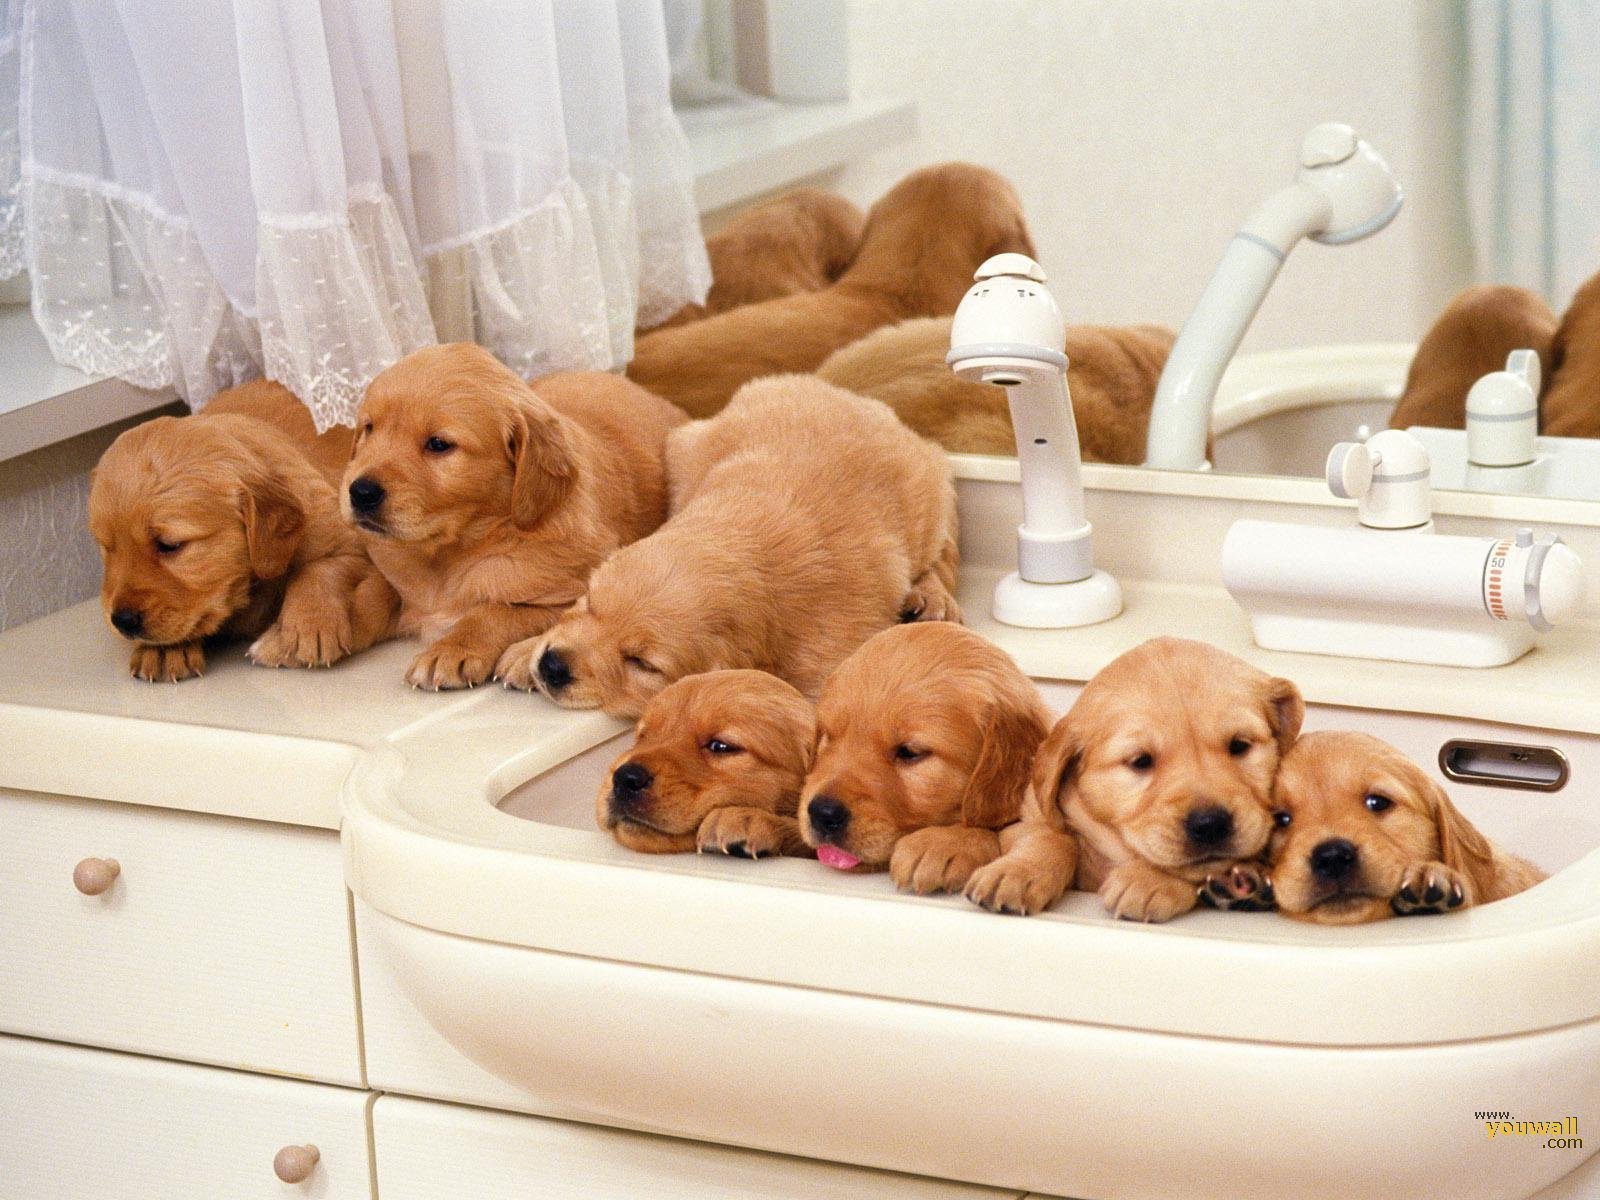 Cute-Puppies-puppies-13632075-1600-1200.jpg